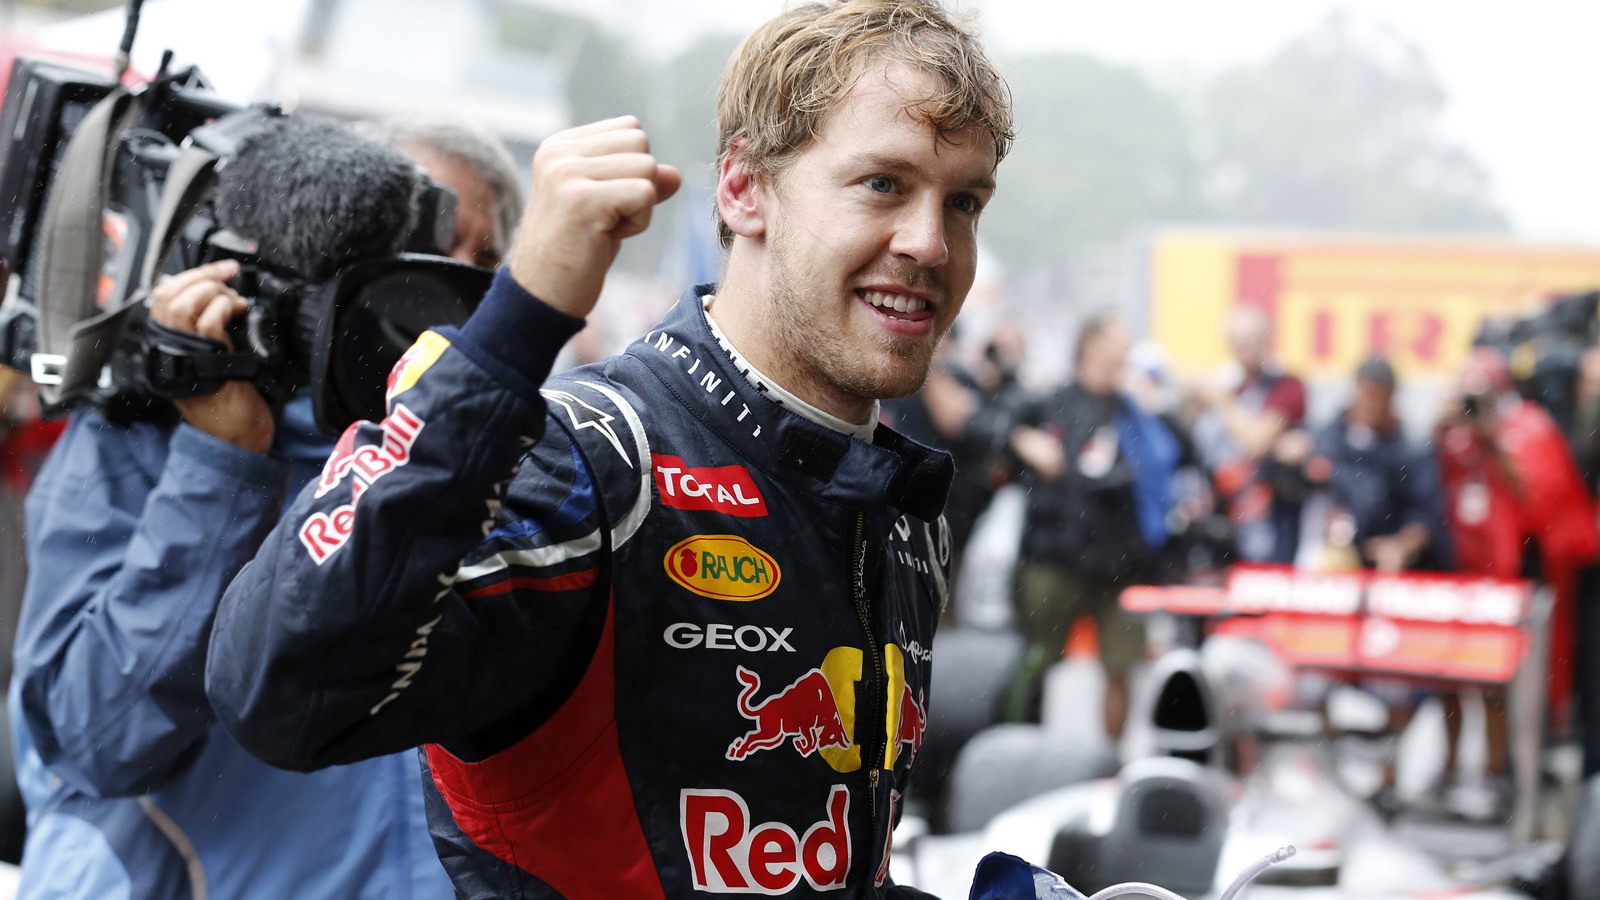 Red Bull Racing’s Sebastian Vettel scores his third F1 World Championship in a row in Brazil